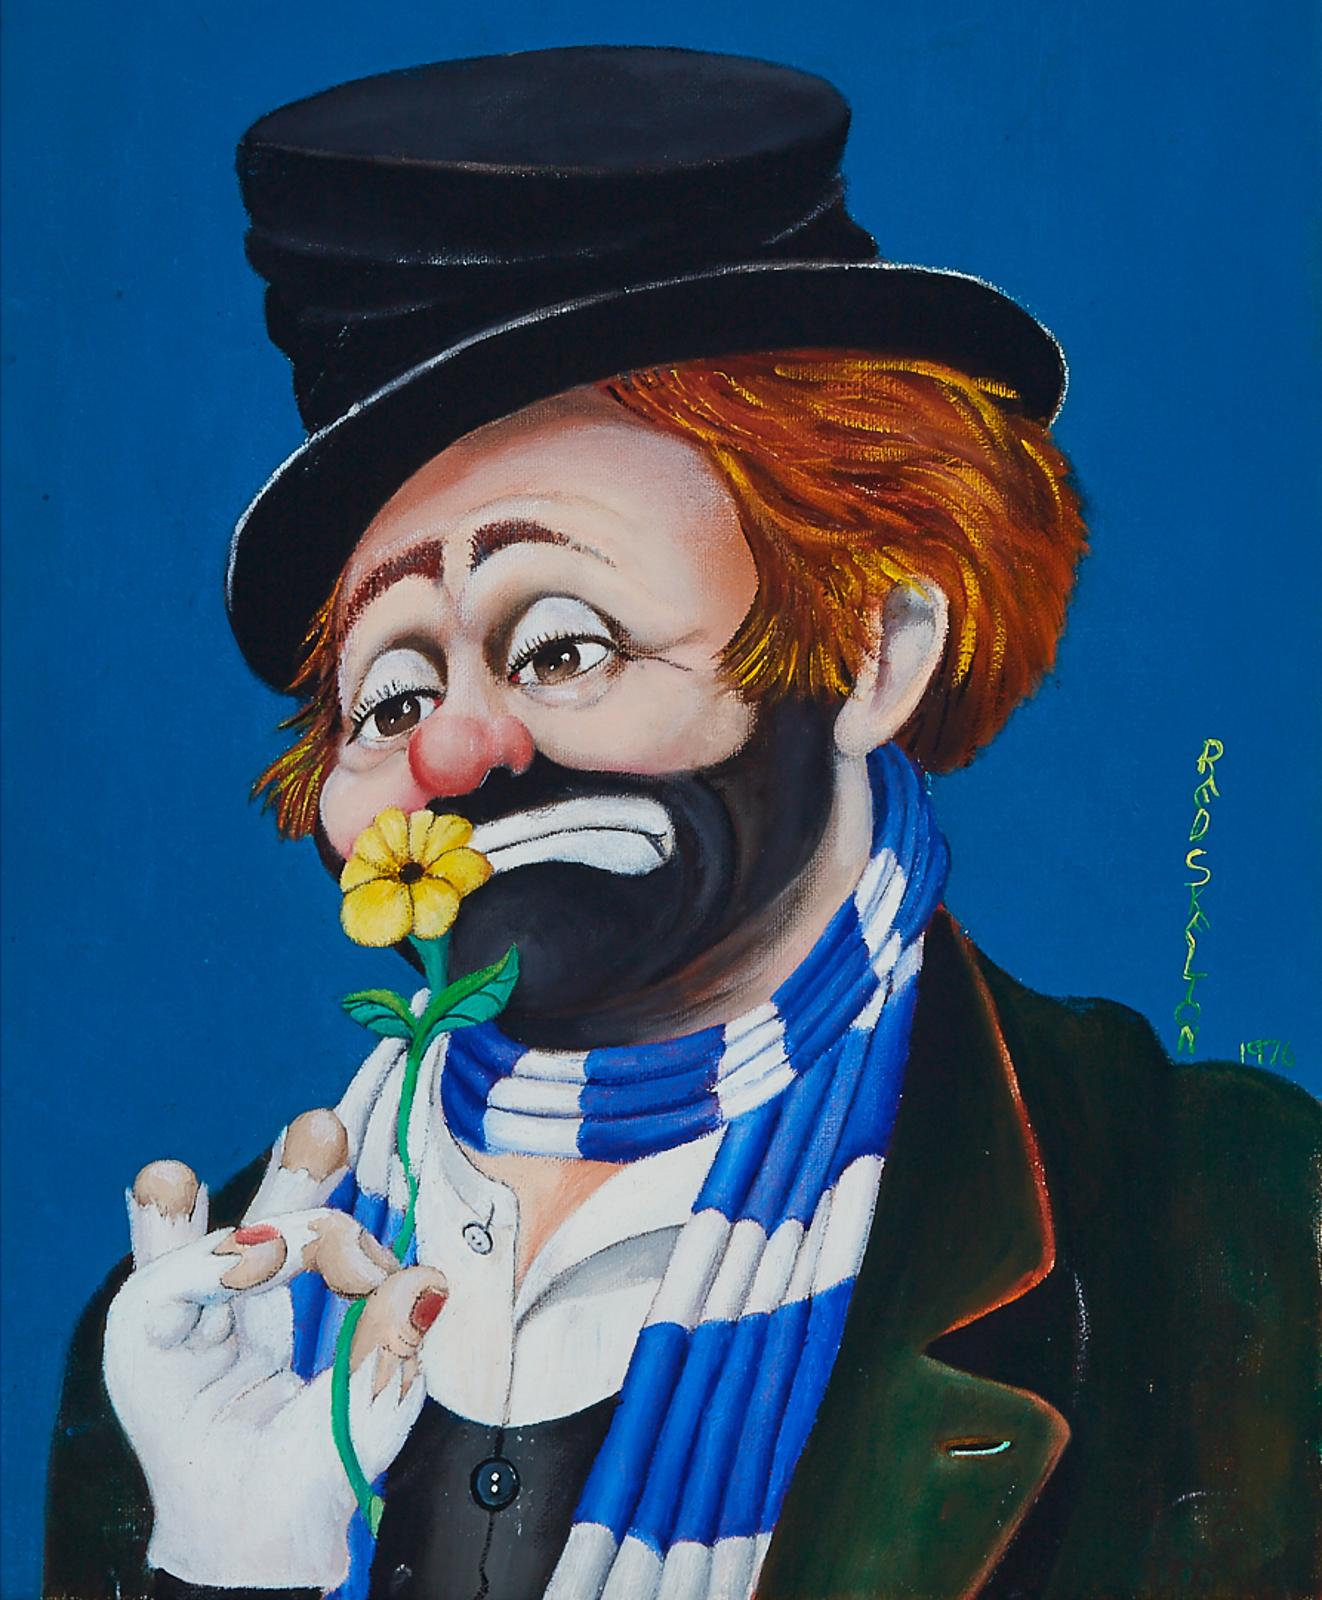 Red (Richard) Skelton (1913-1997) - Clown With Flower, 1976